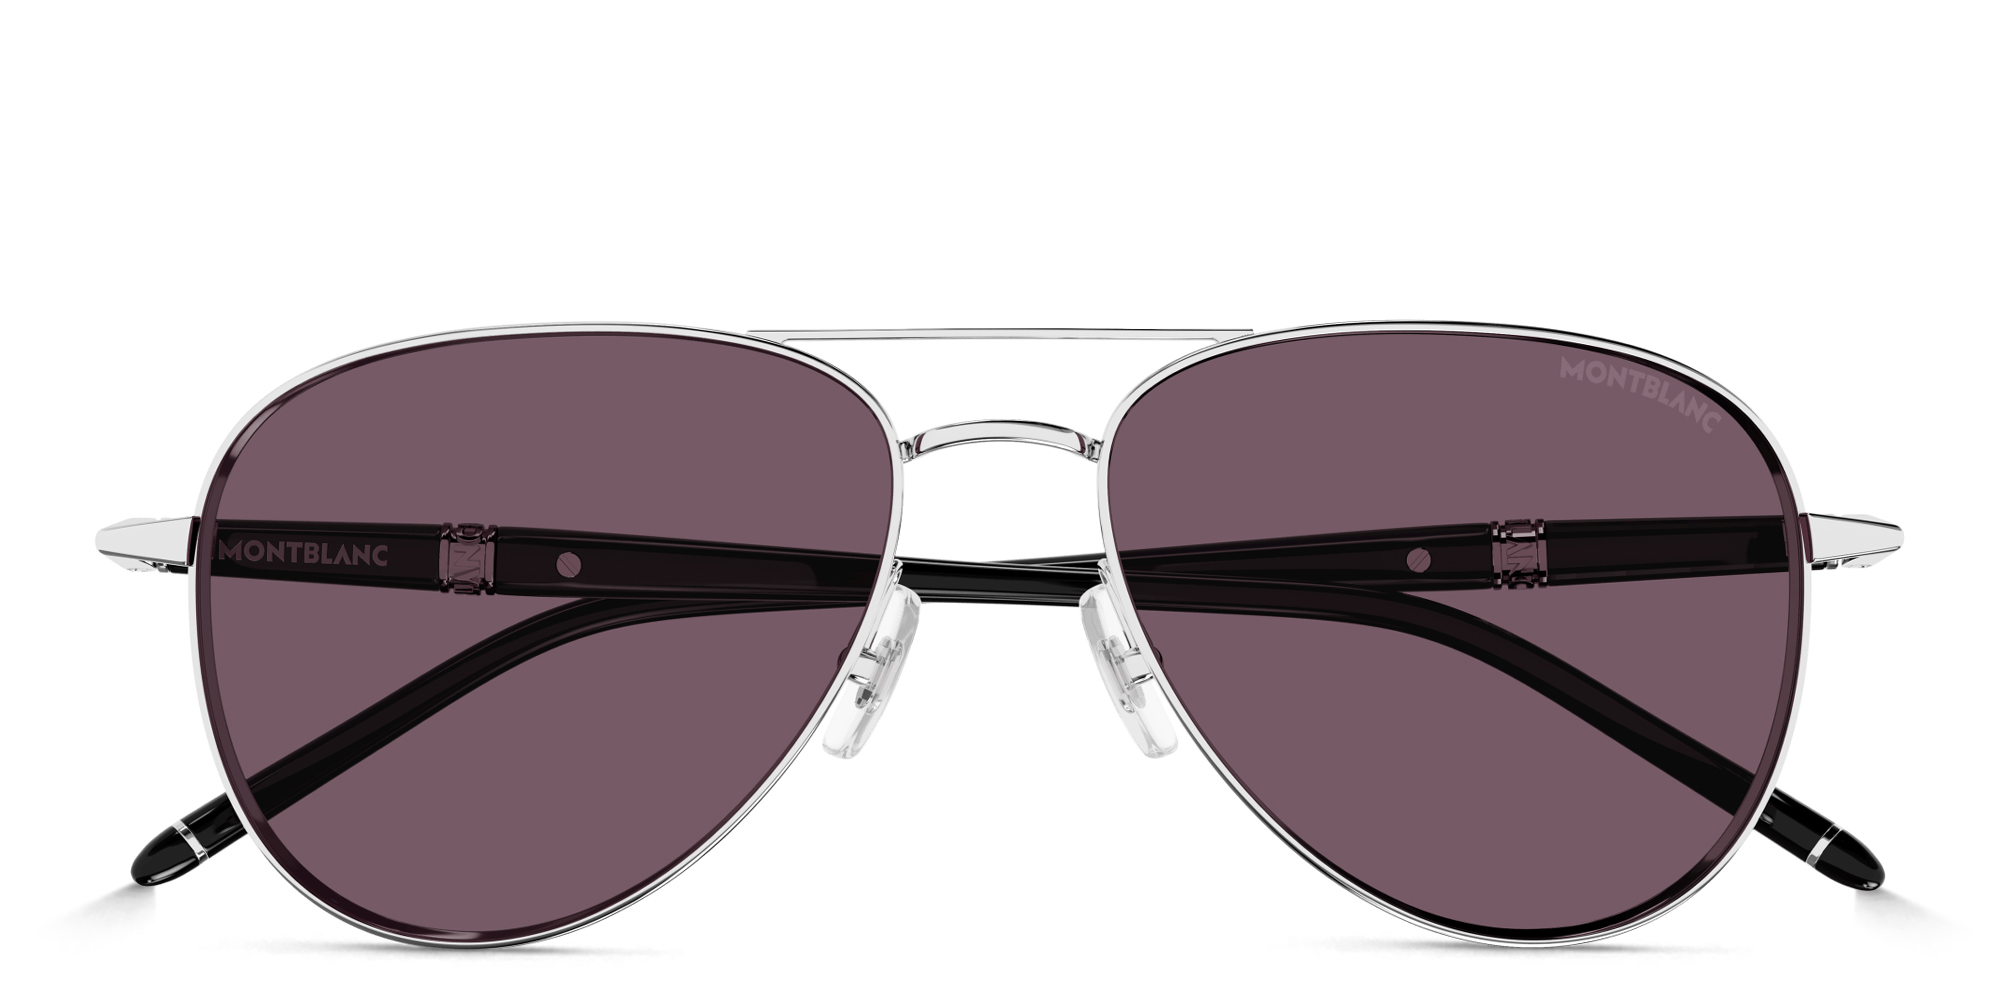 

Meisterstück Aviator Sunglasses, Silver